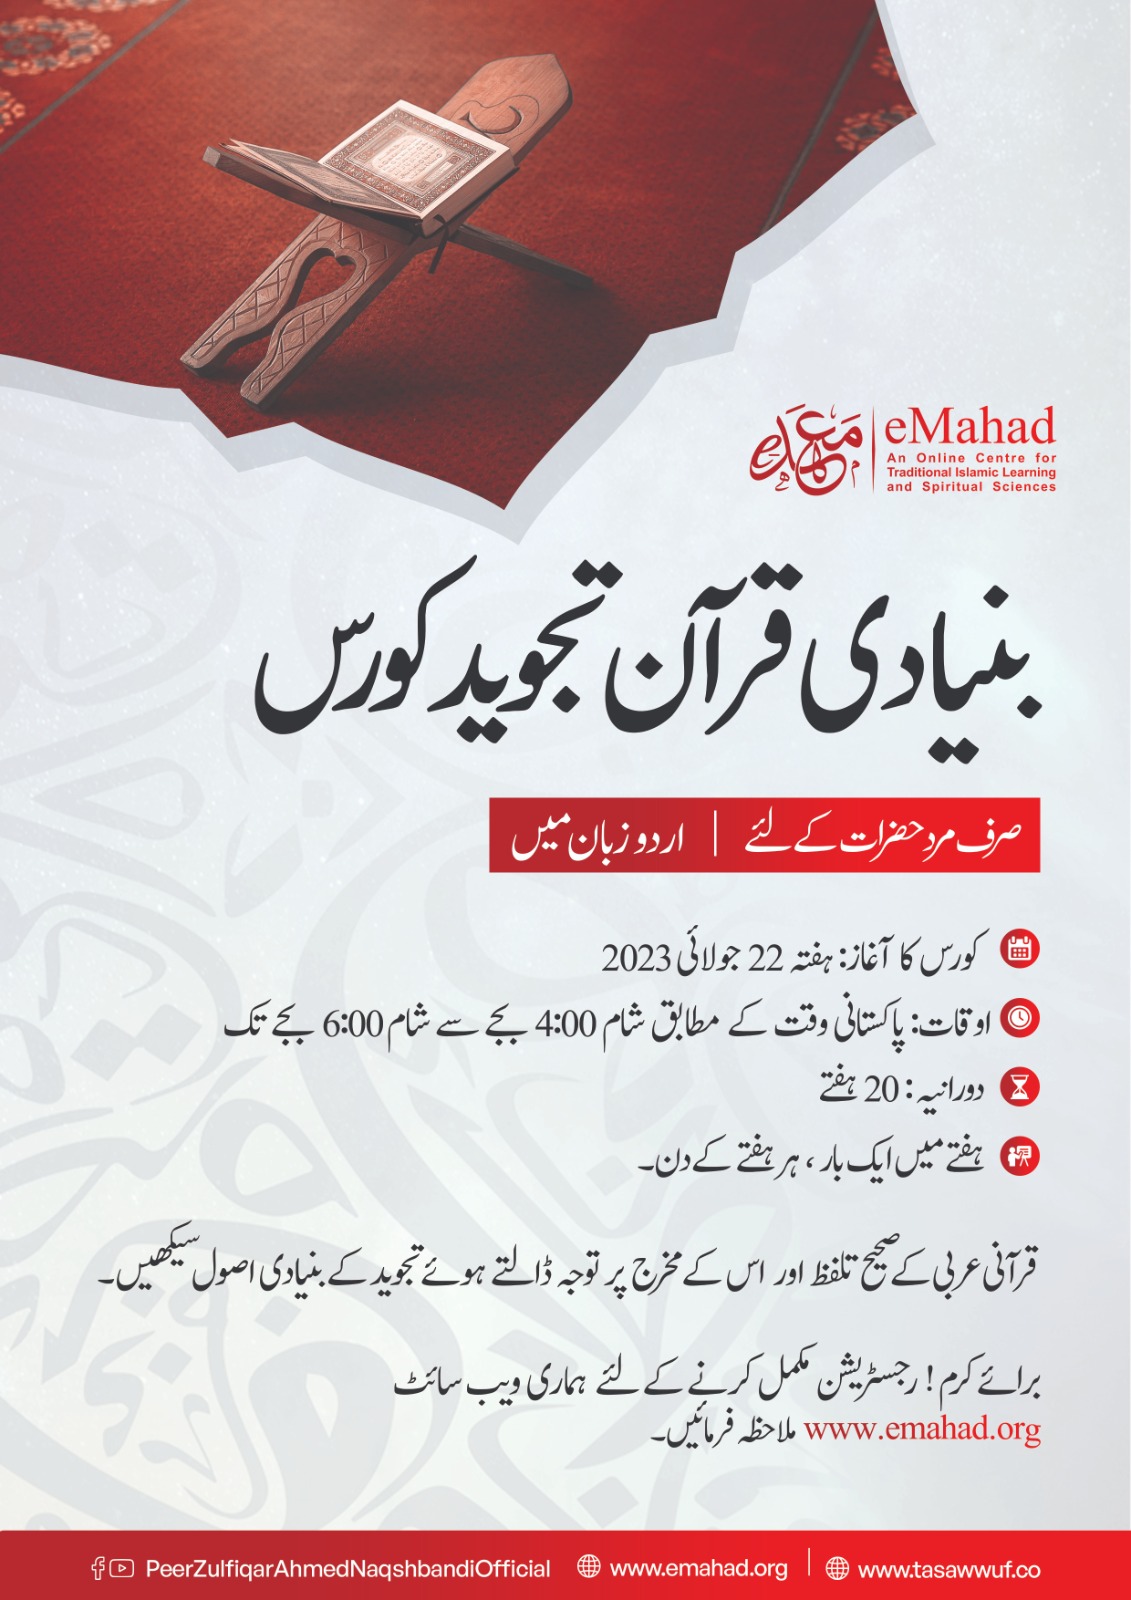 BASIC QURAN TAJWEED COURSE - بنیادی قرآن تجوید کورس  |  For Men Only | In Urdu Language